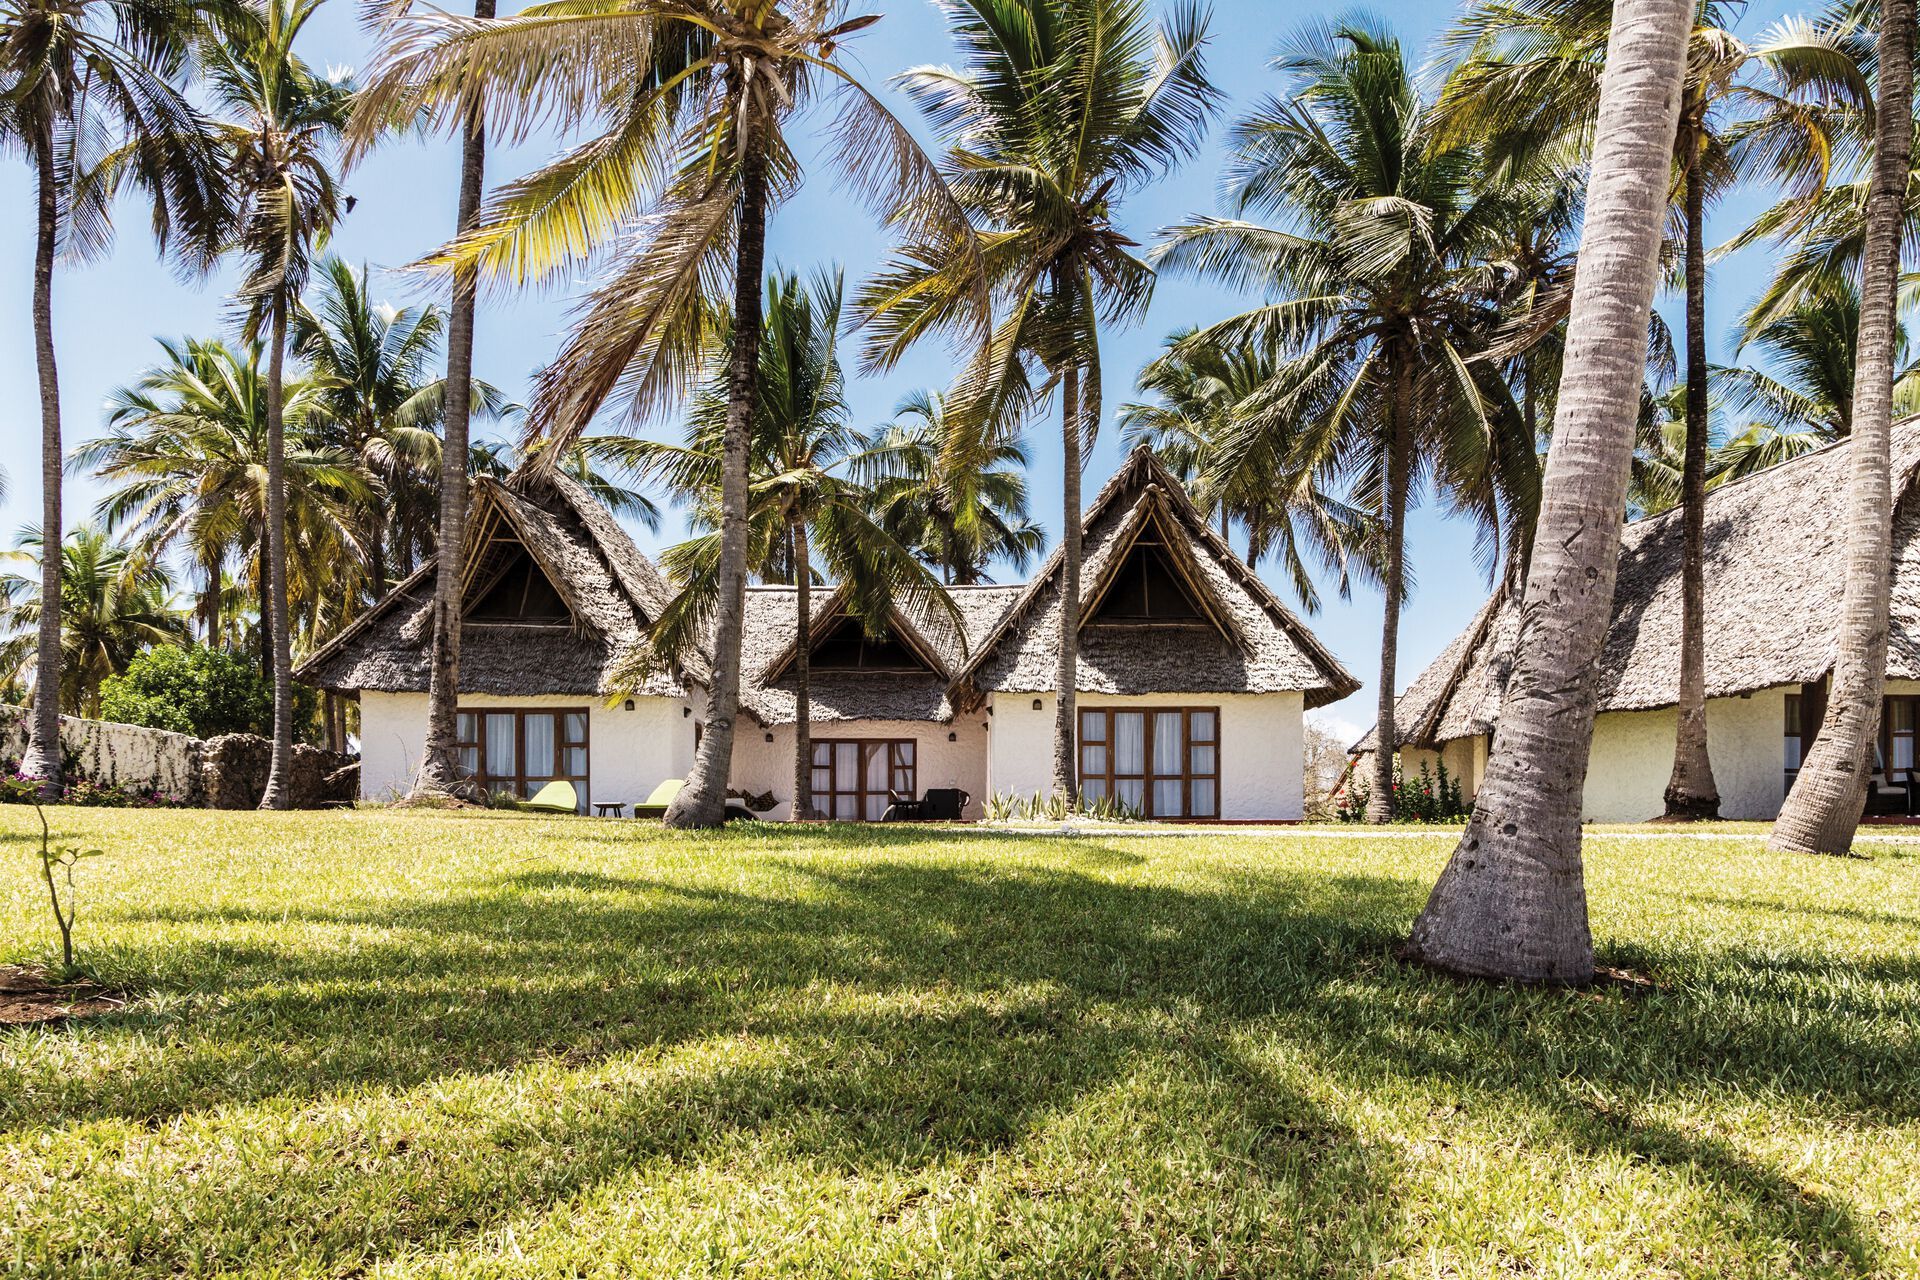 Tanzanie - Zanzibar - Hôtel Karafuu Beach Resort & Spa 4*